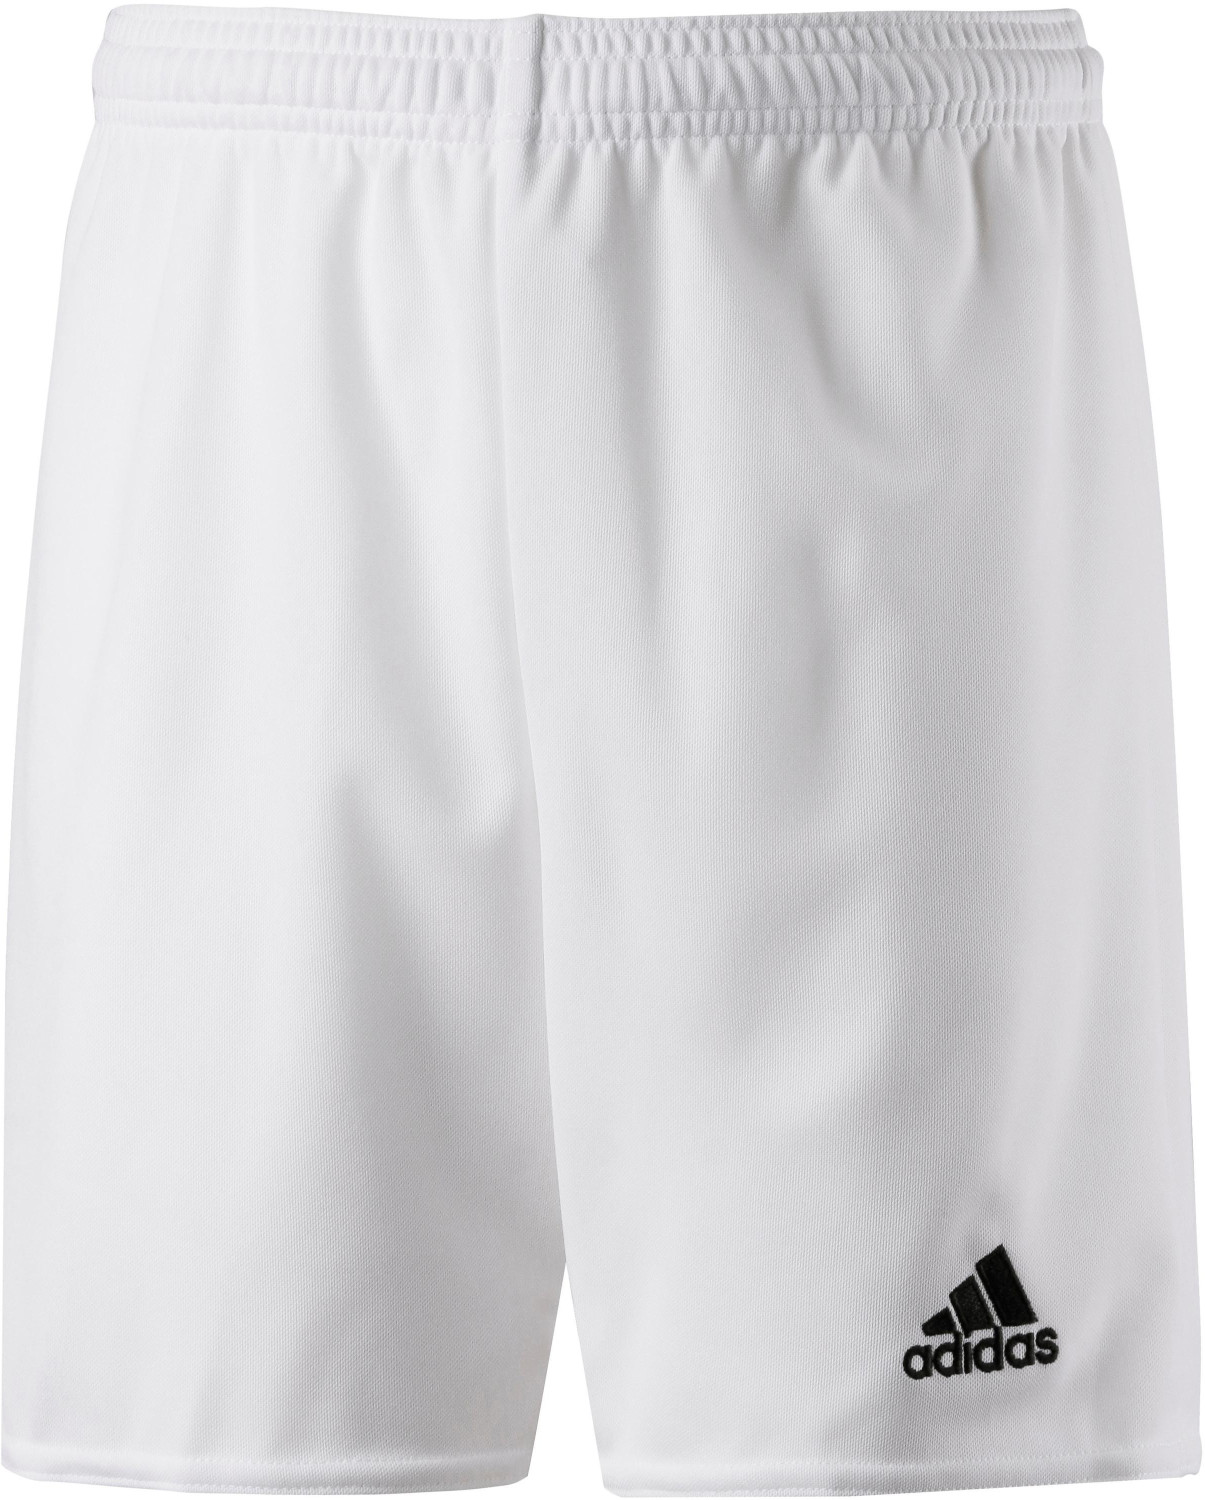 Photos - Football Kit Adidas Parma 16 Shorts  White / Black (2019)